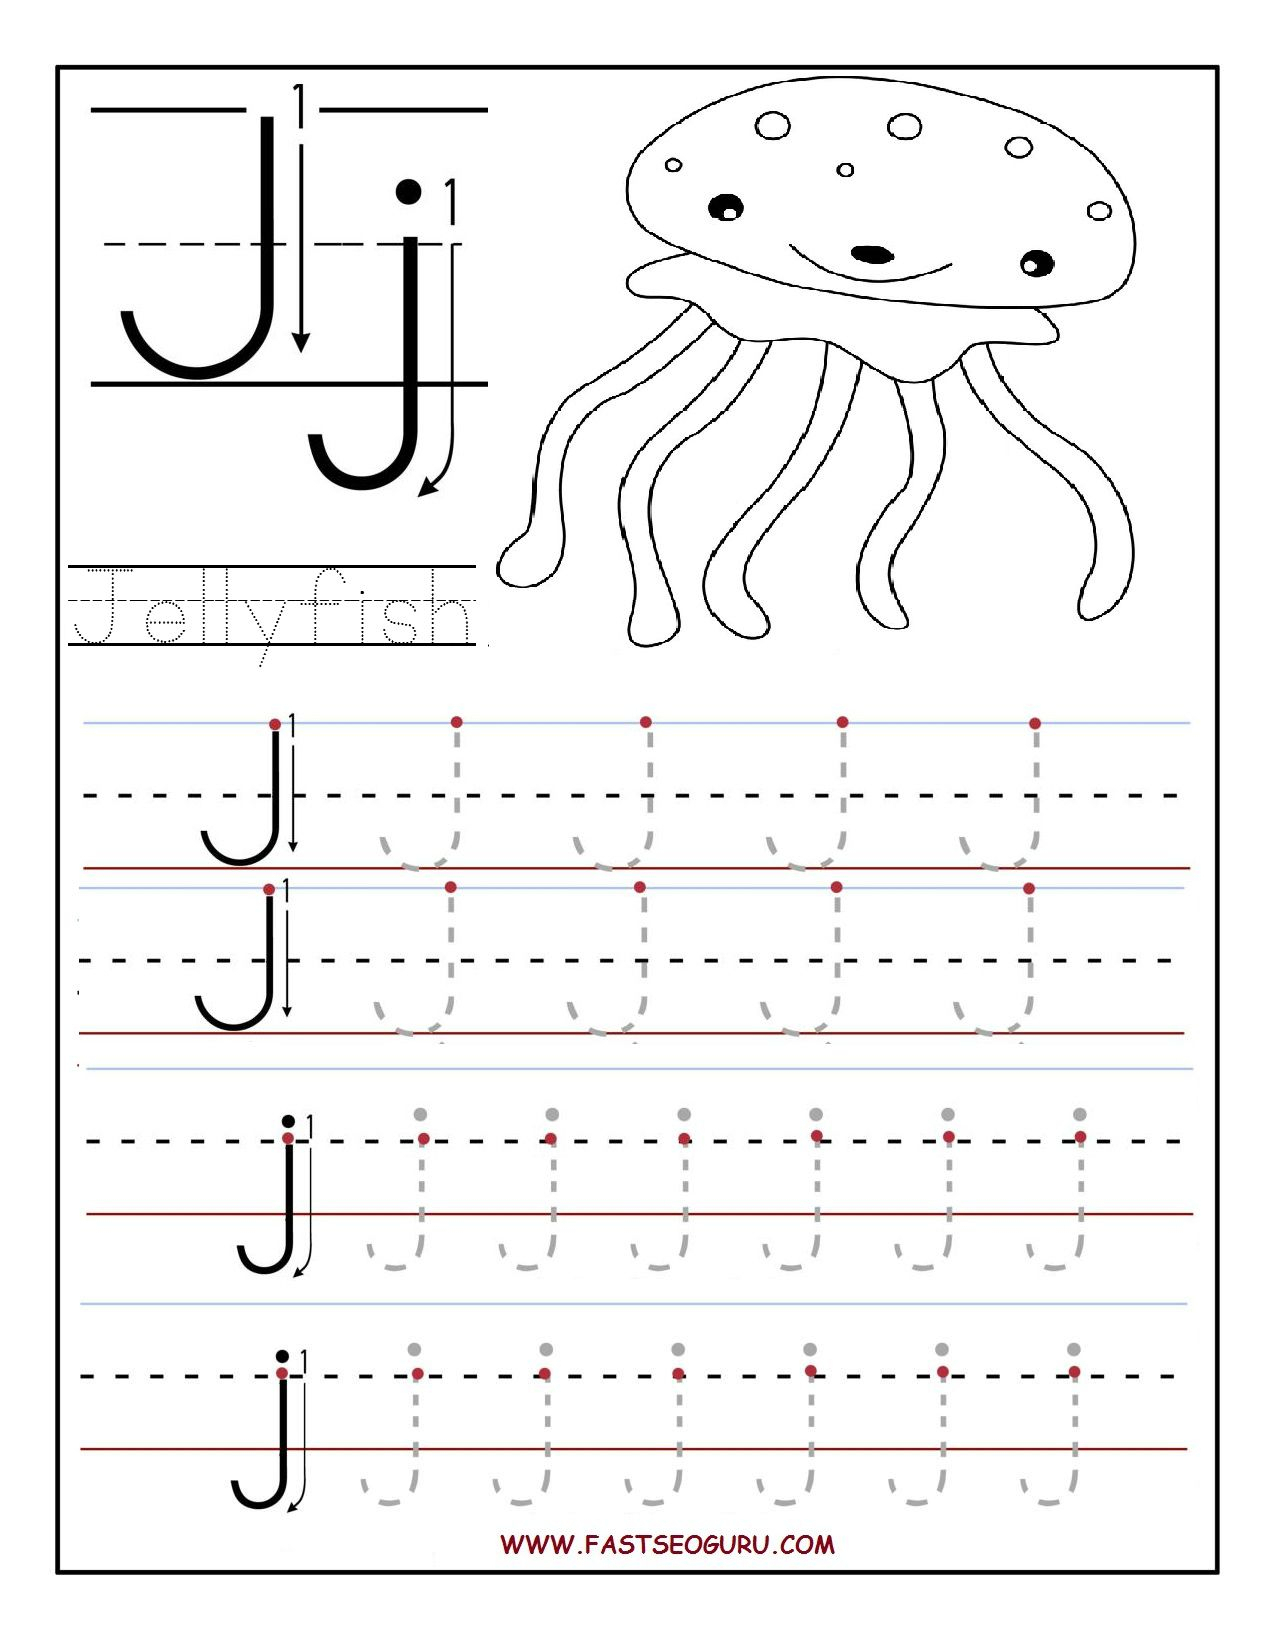 Printable Letter J Tracing Worksheets For Preschool regarding Letter J Worksheets For Preschool